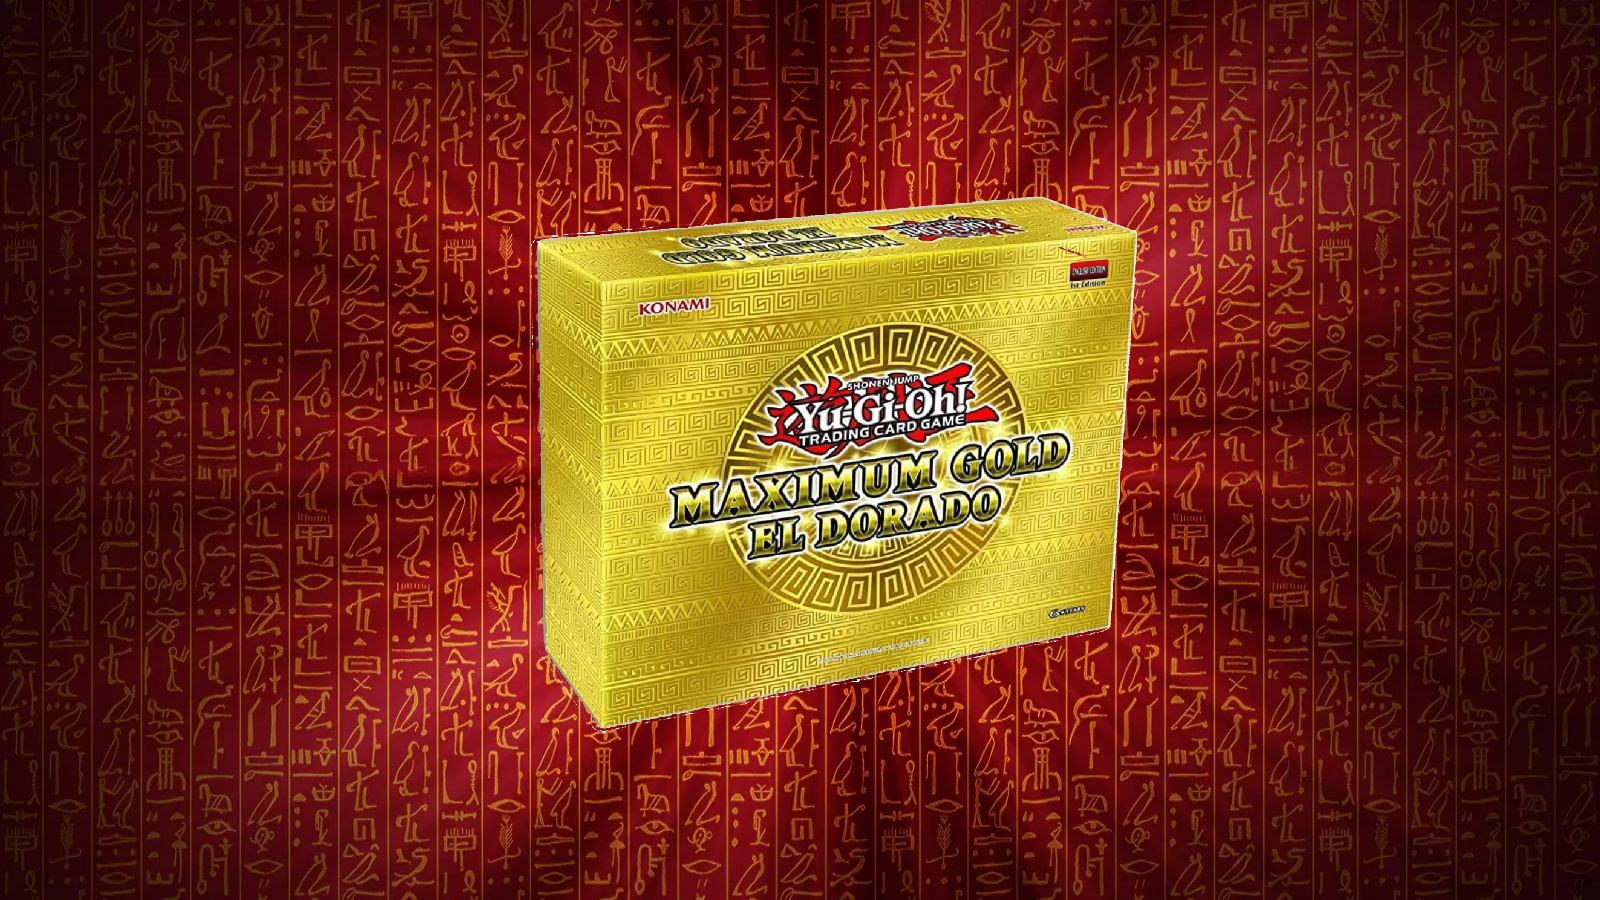 Yugioh Maximum Gold box on red background